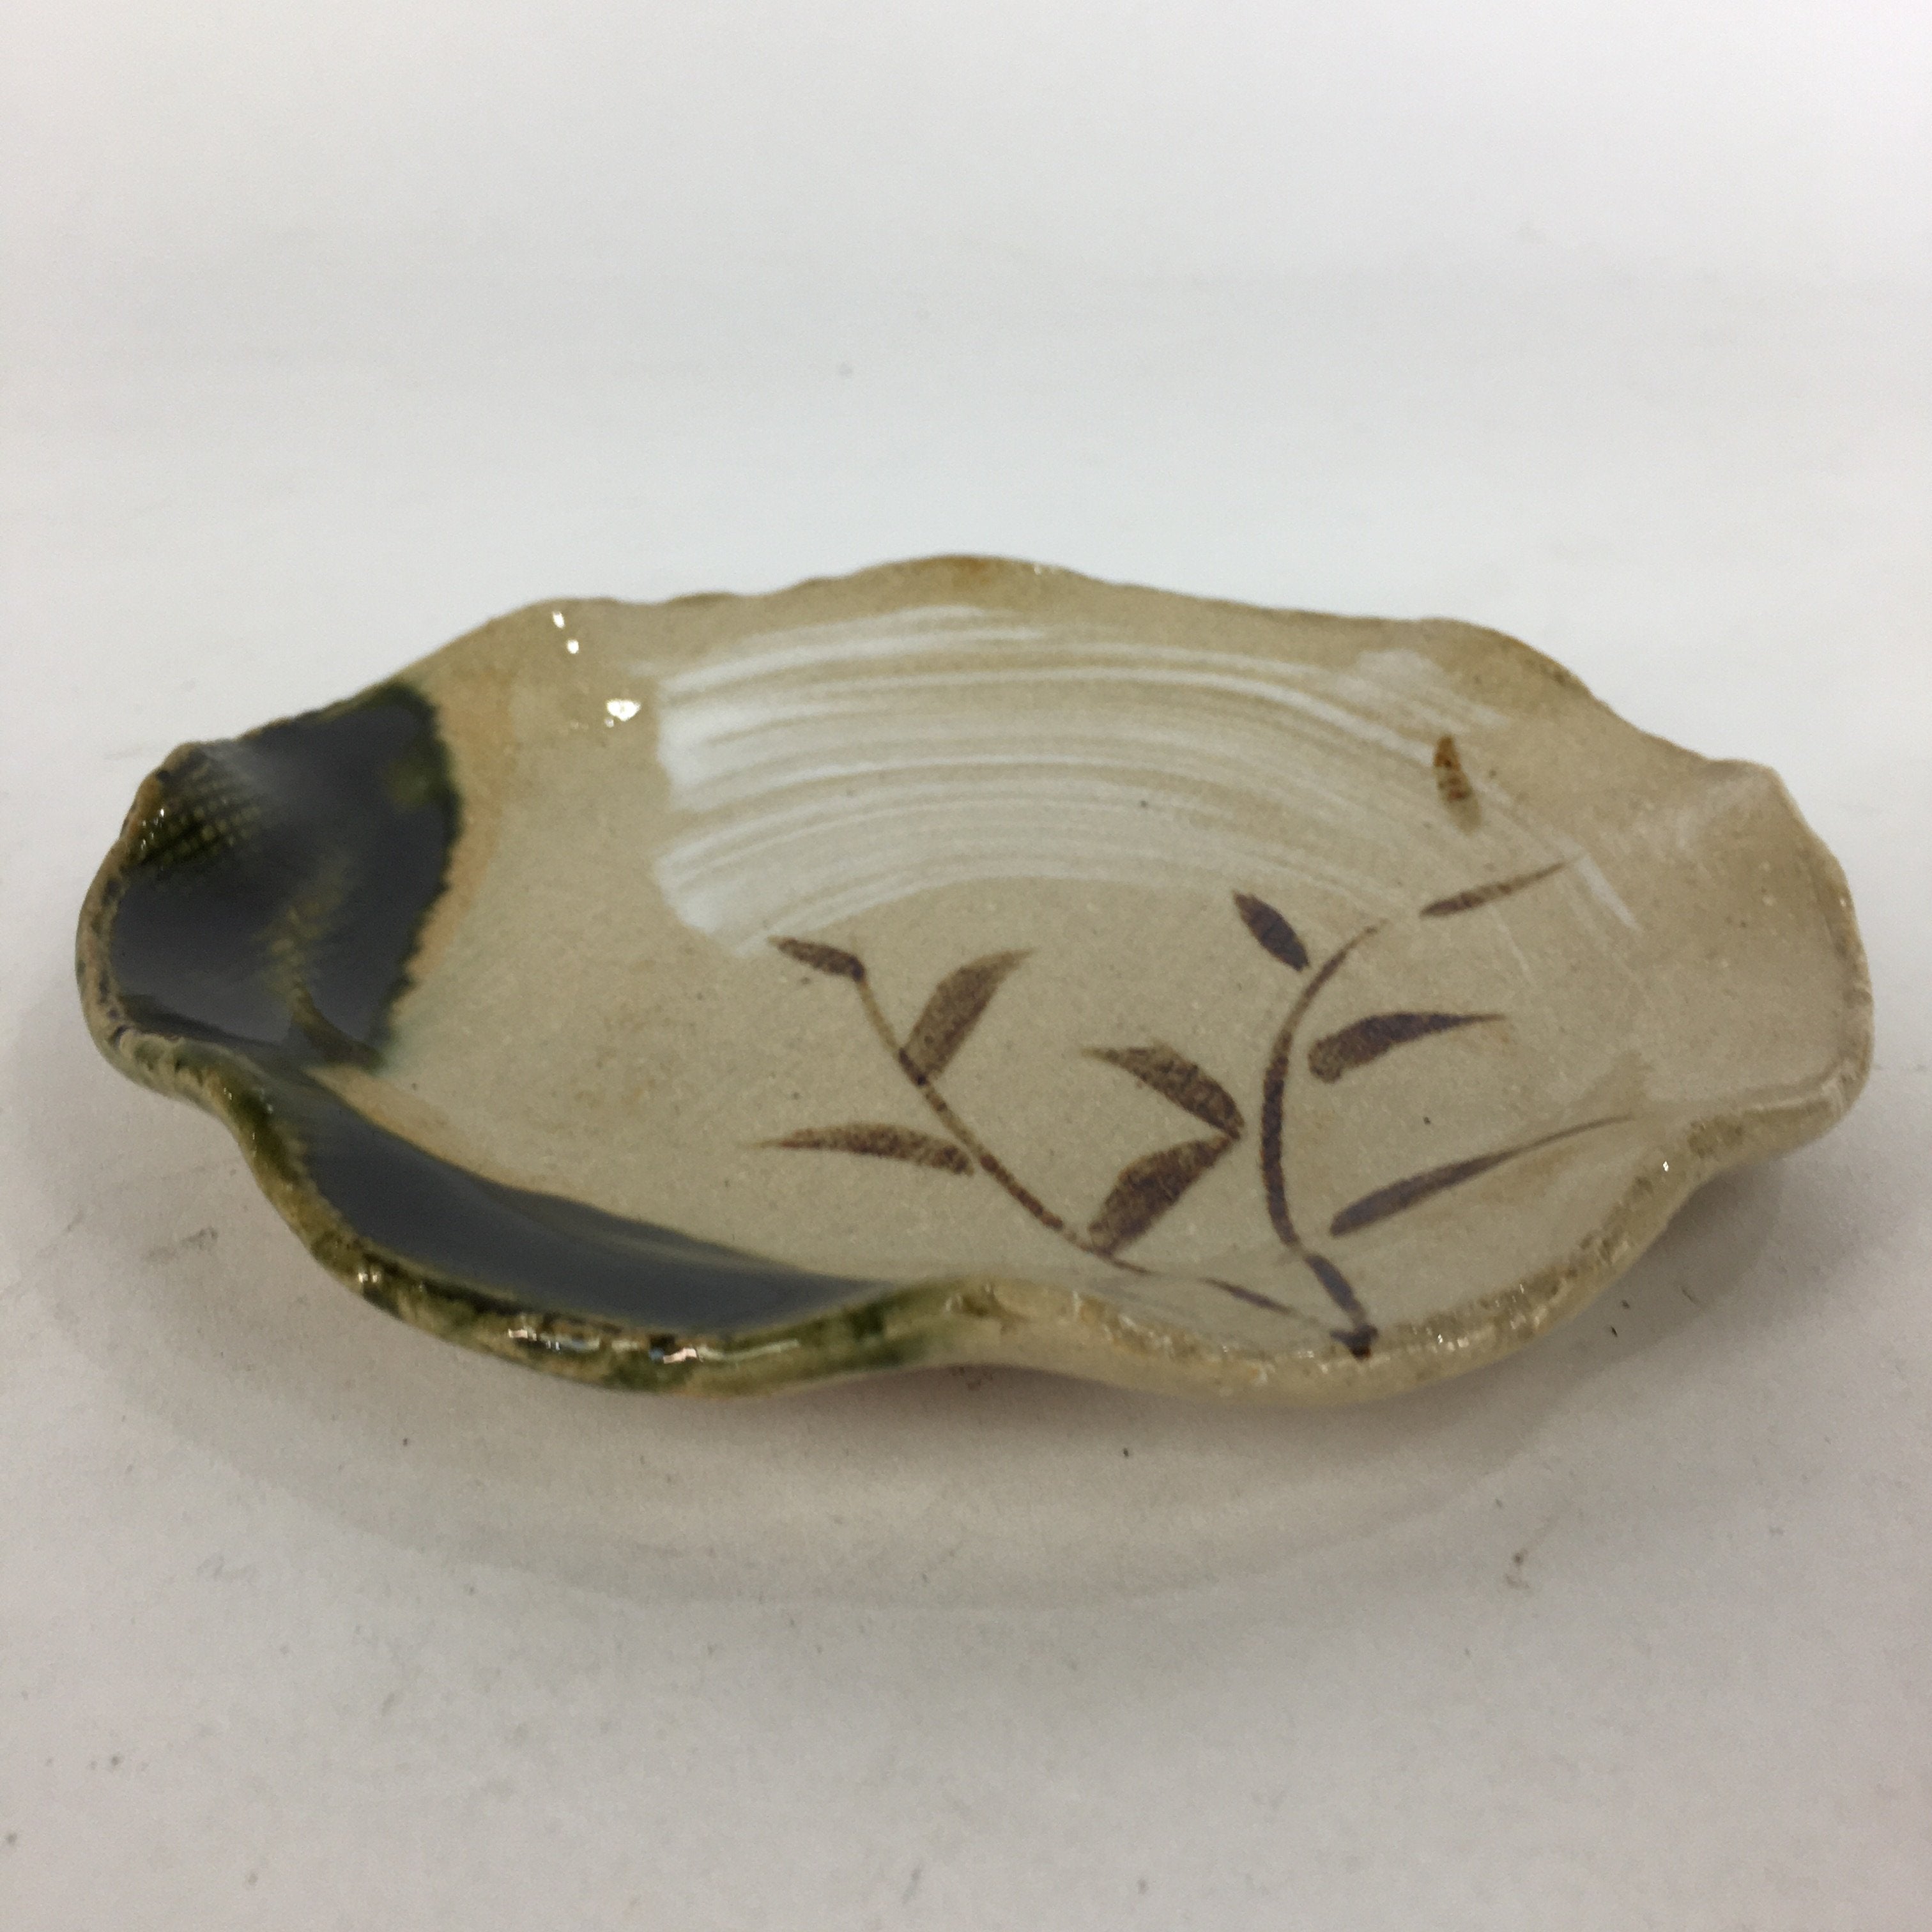 Japanese Ceramic Small Plate Oribe ware Kozara Vtg Round Pottery Bamboo PP621